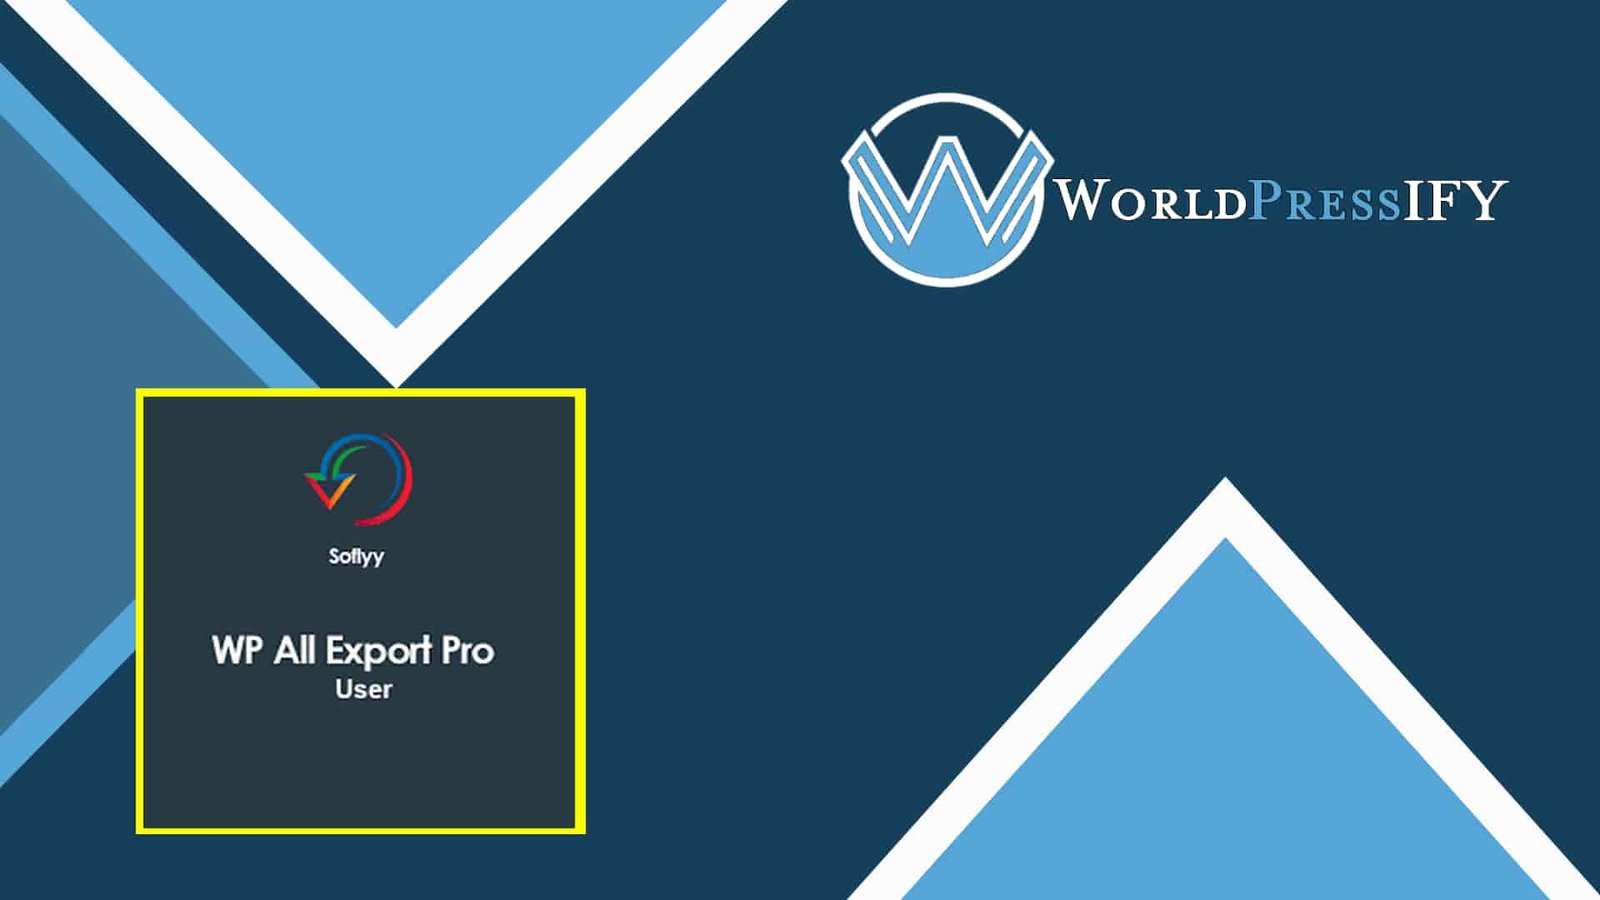 WP All Export - User Add-On Pro - WorldPress IFY